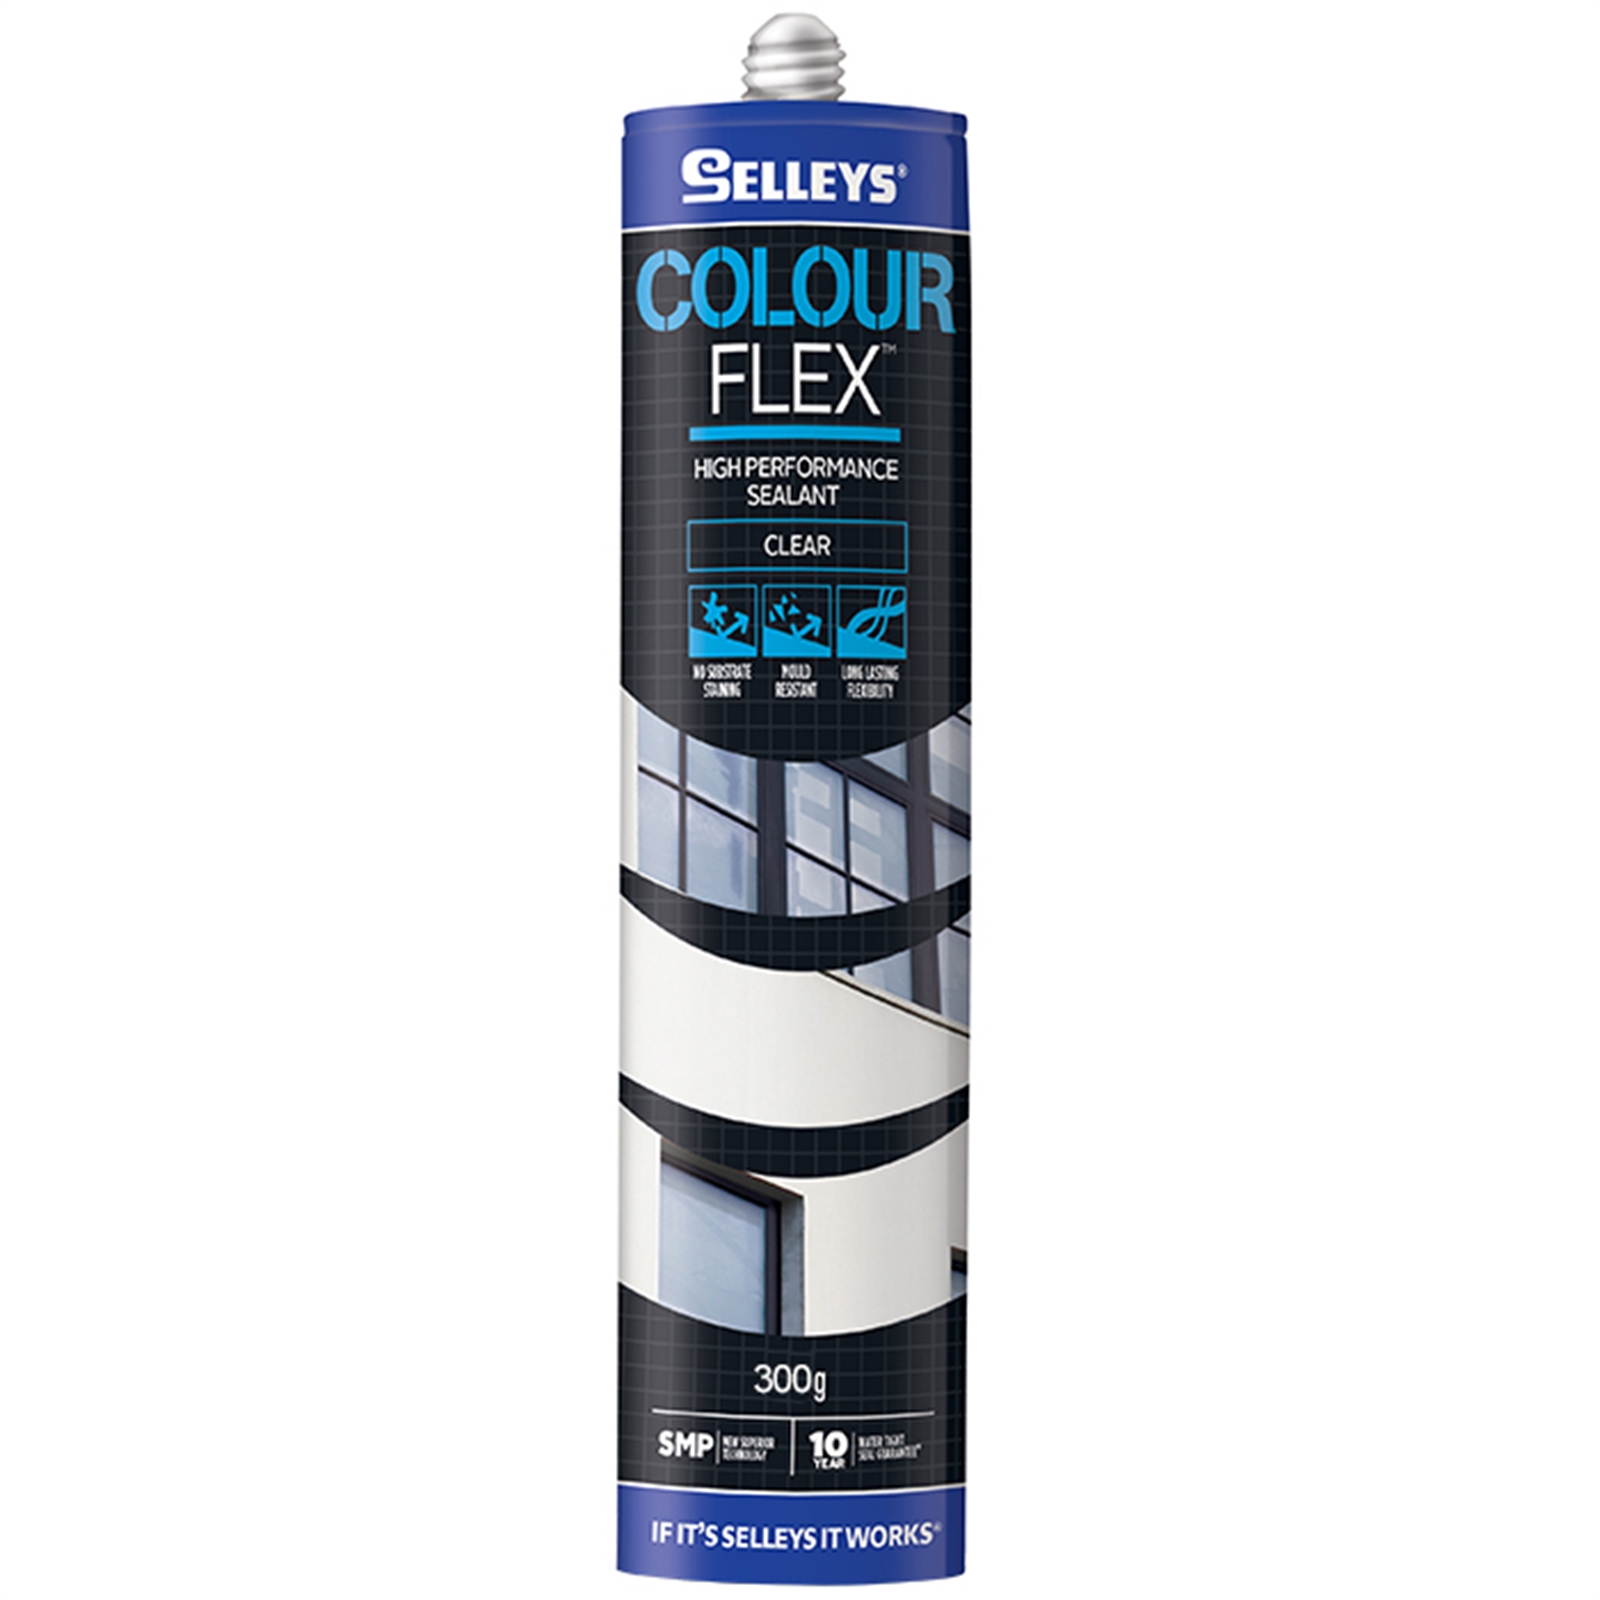 Selleys 300g Colour Flex Clear